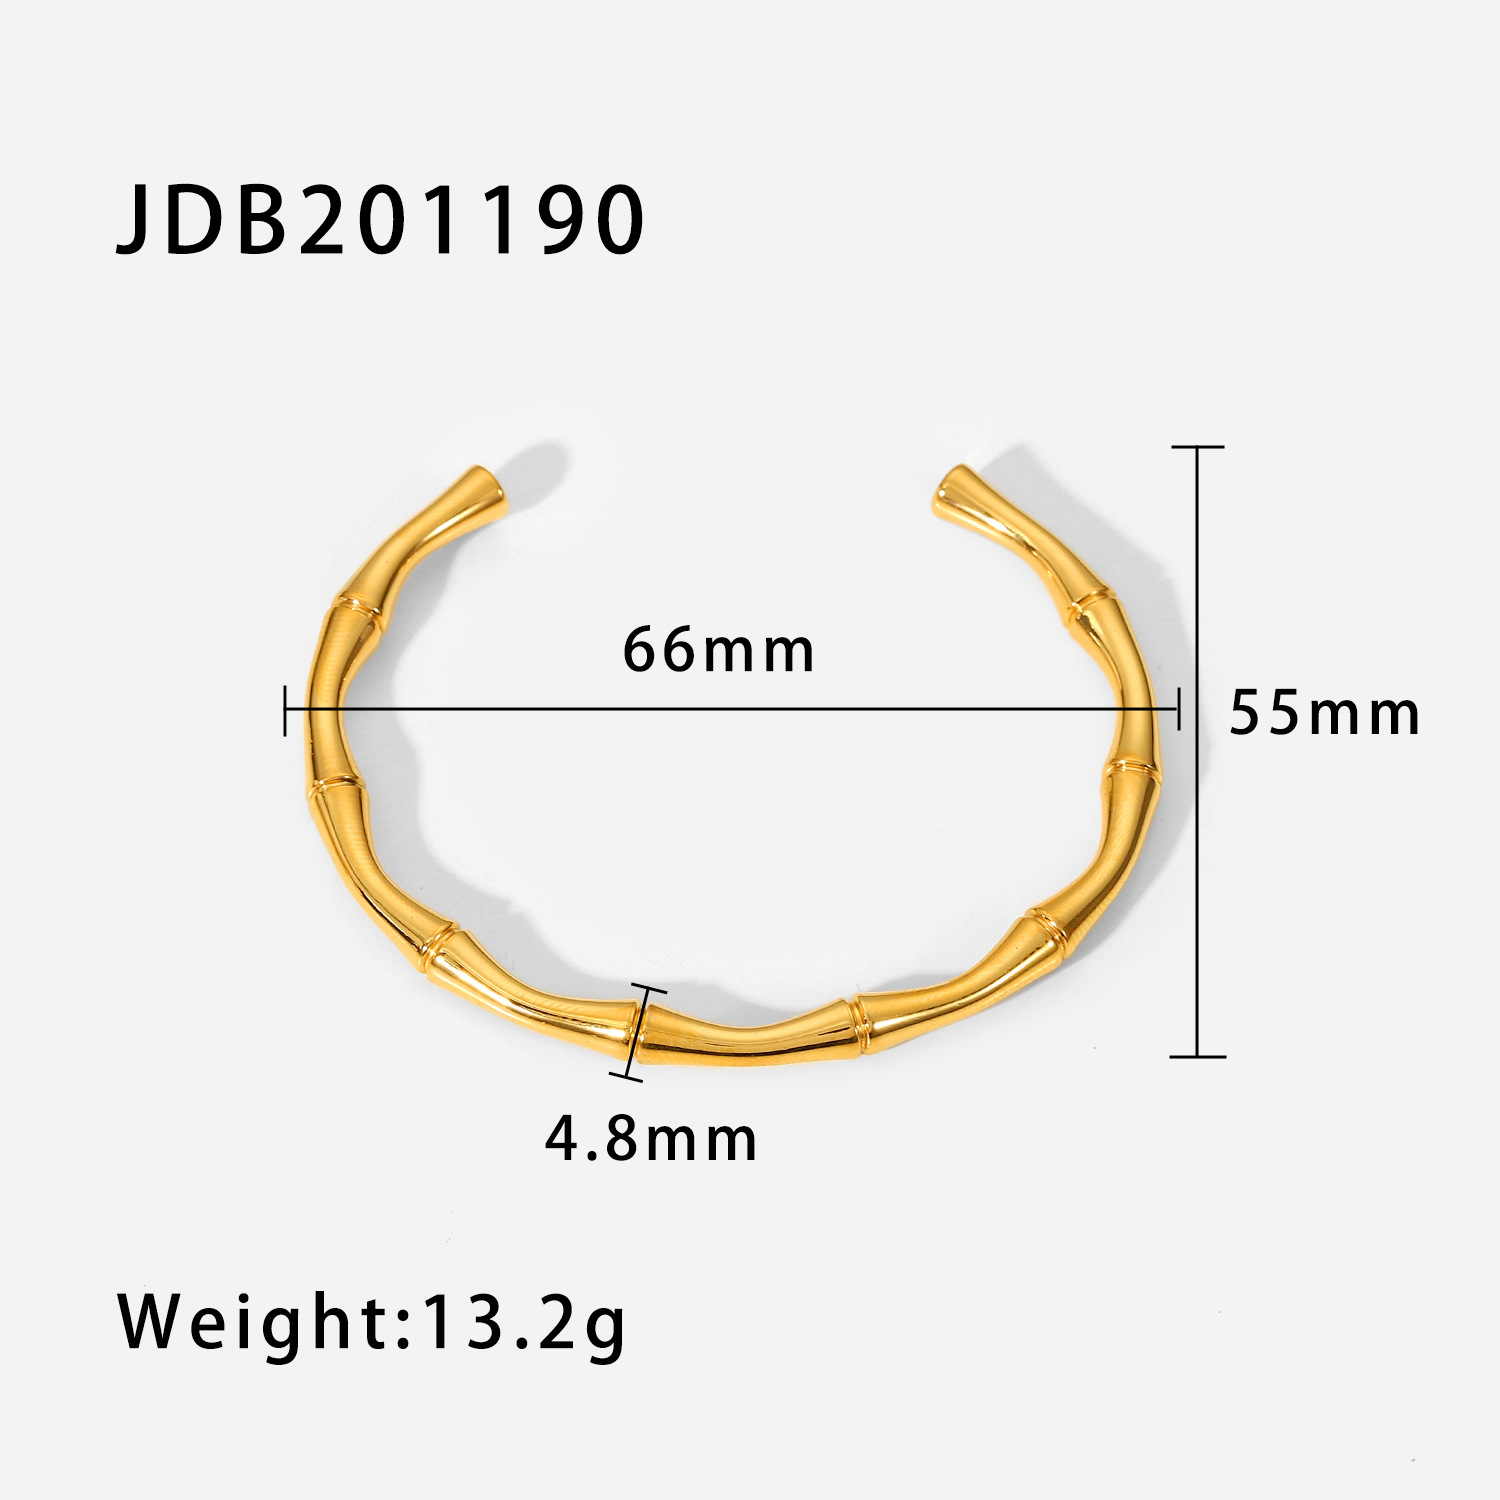 1:JDB201190  66x55mm